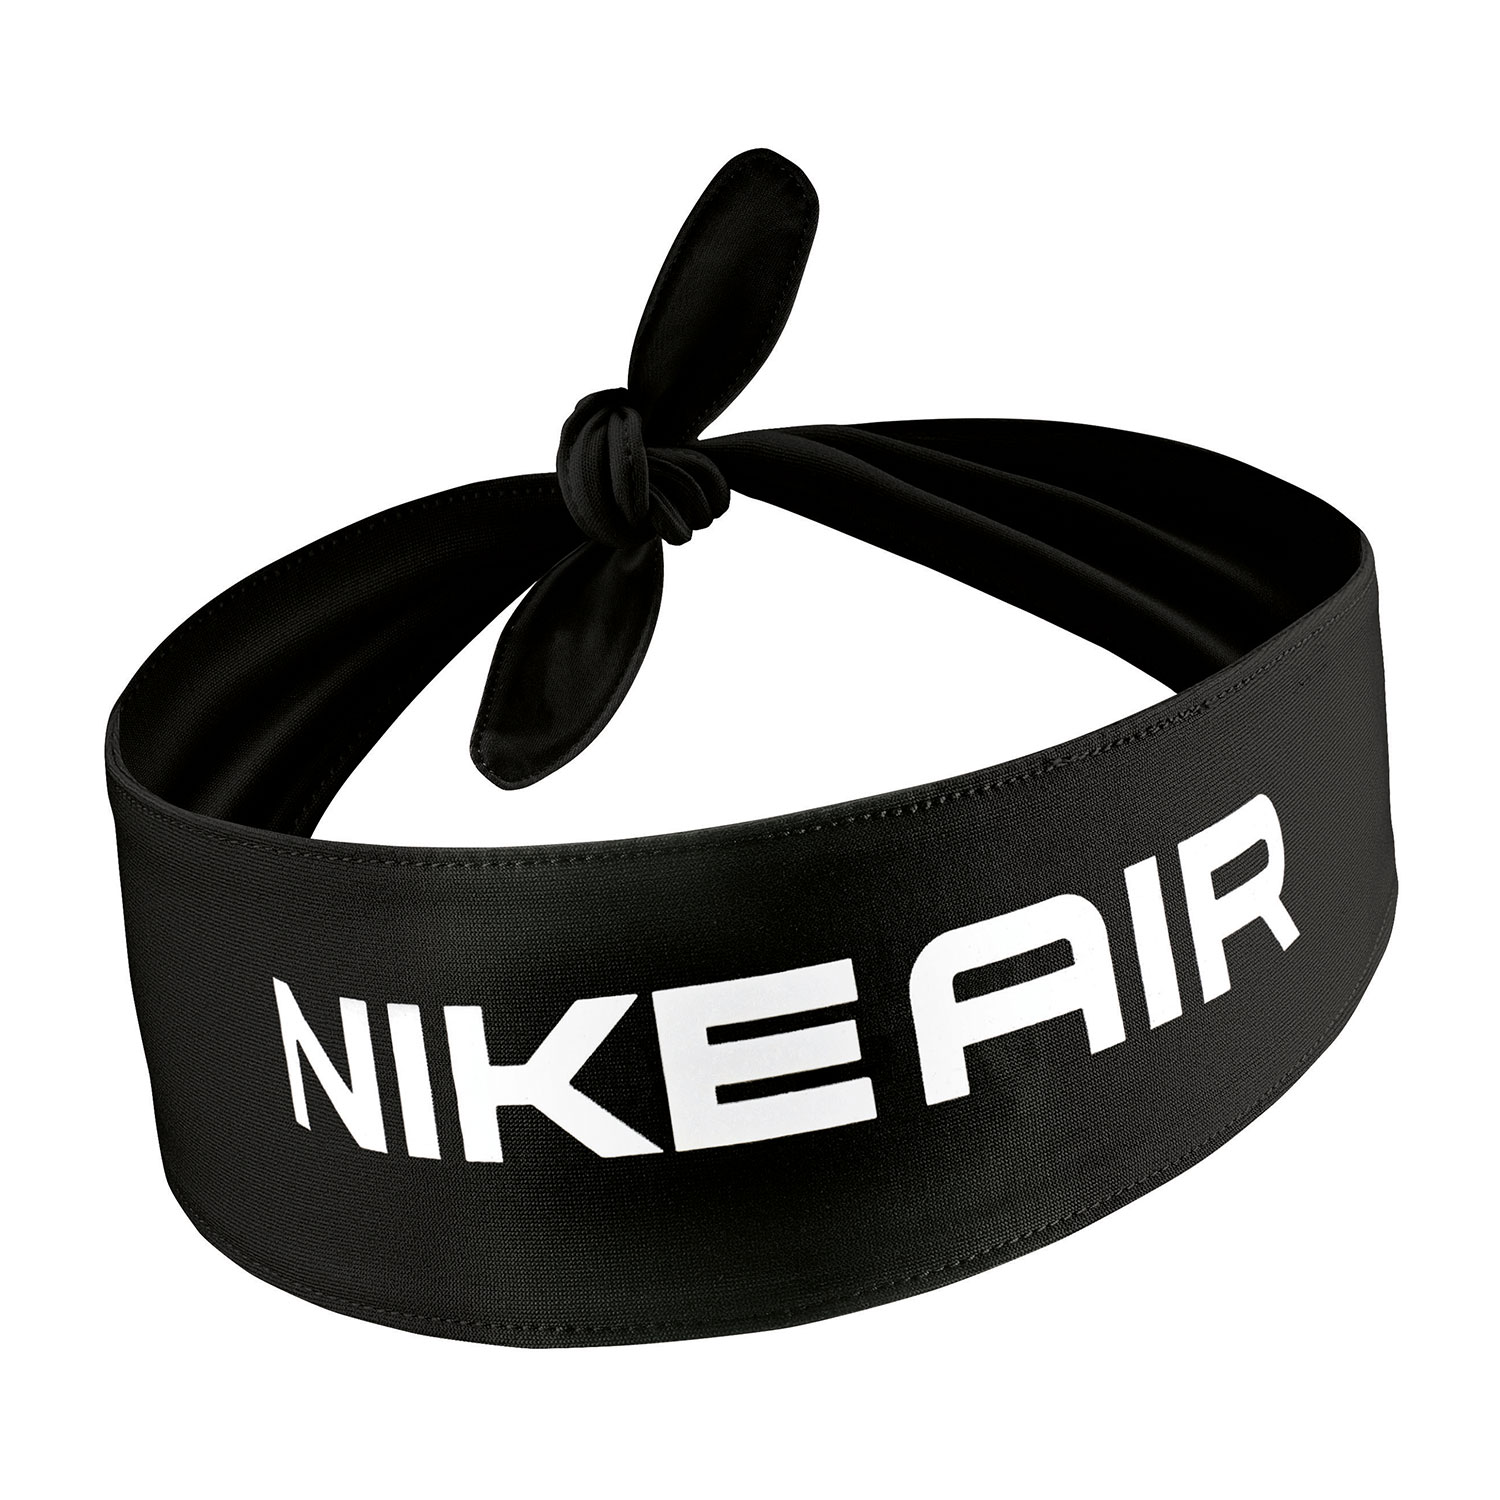 Nike Skinny Air Graphic Headband - Black/White